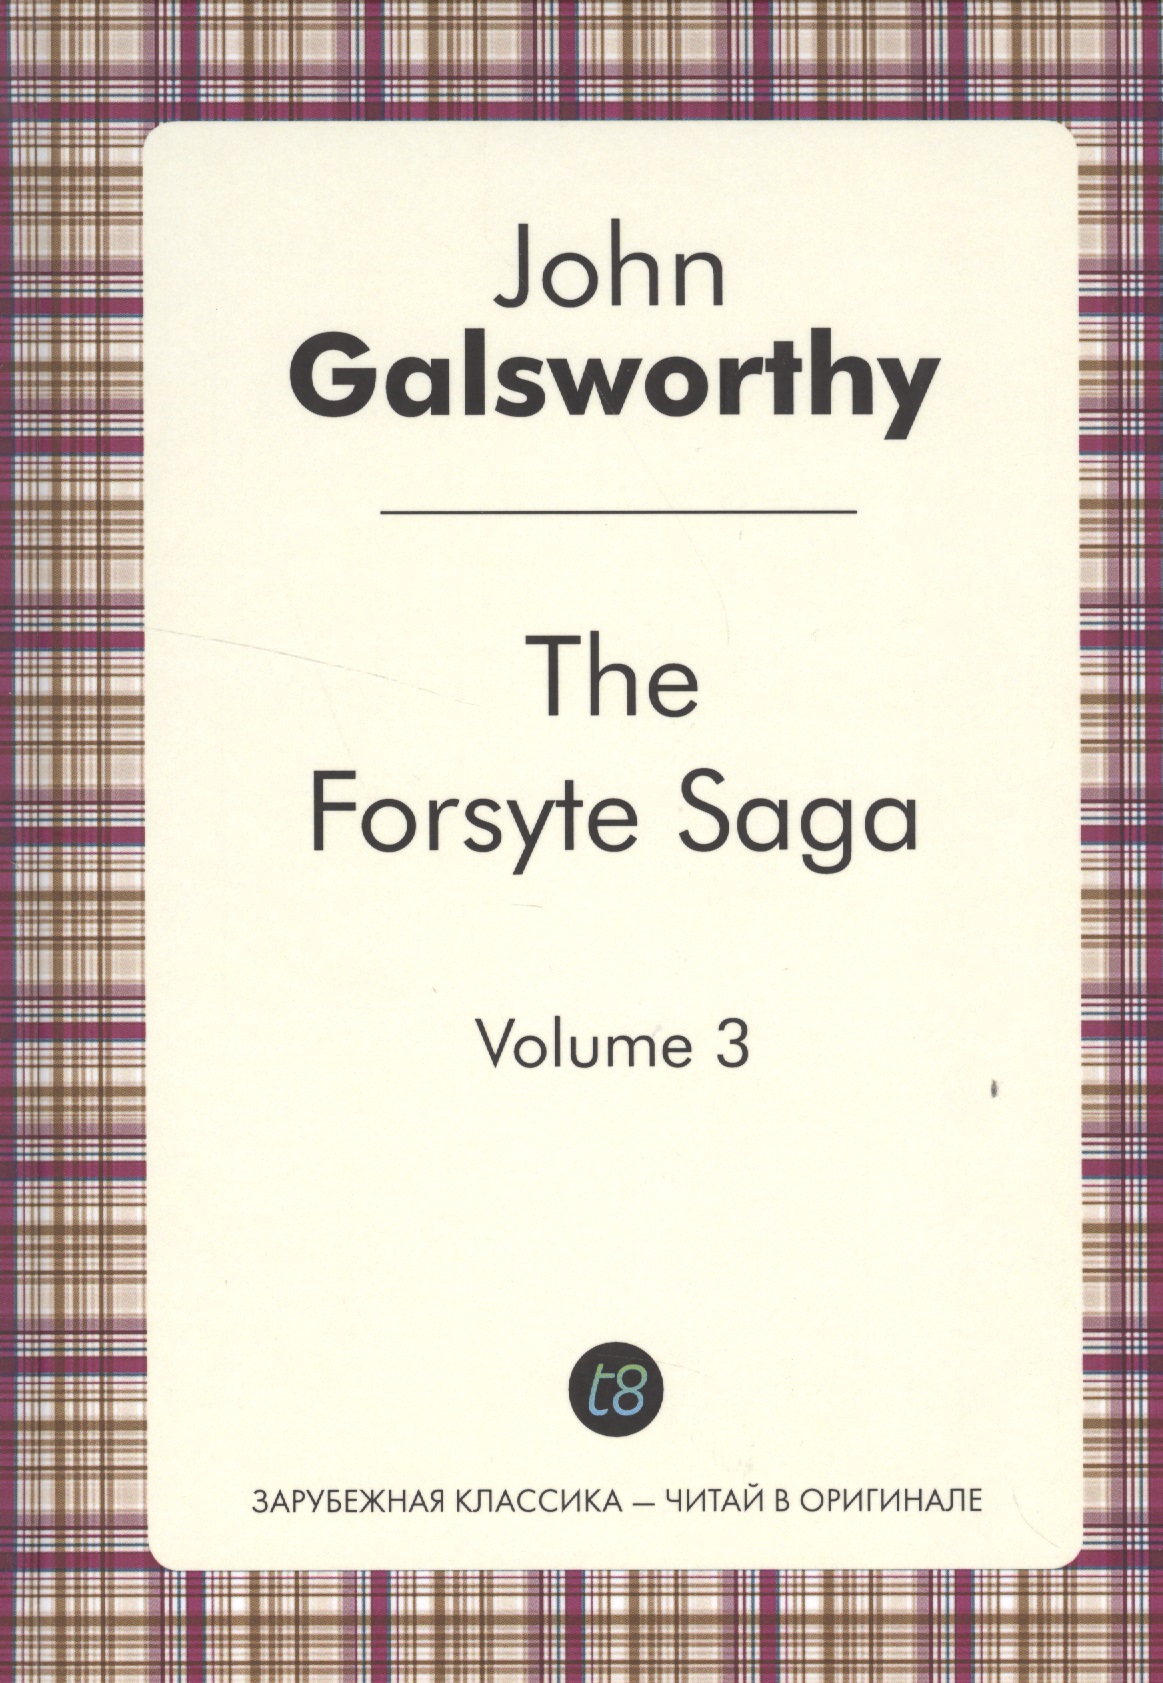 Голсуорси Джон The Forsyte Saga. Vol. 3 = Сага о Форсайтах.Т. 3: цикл на англ.яз. голсуорси джон the forsyte saga в 3 т t 3 сага о форсайтах роман сага на англ яз